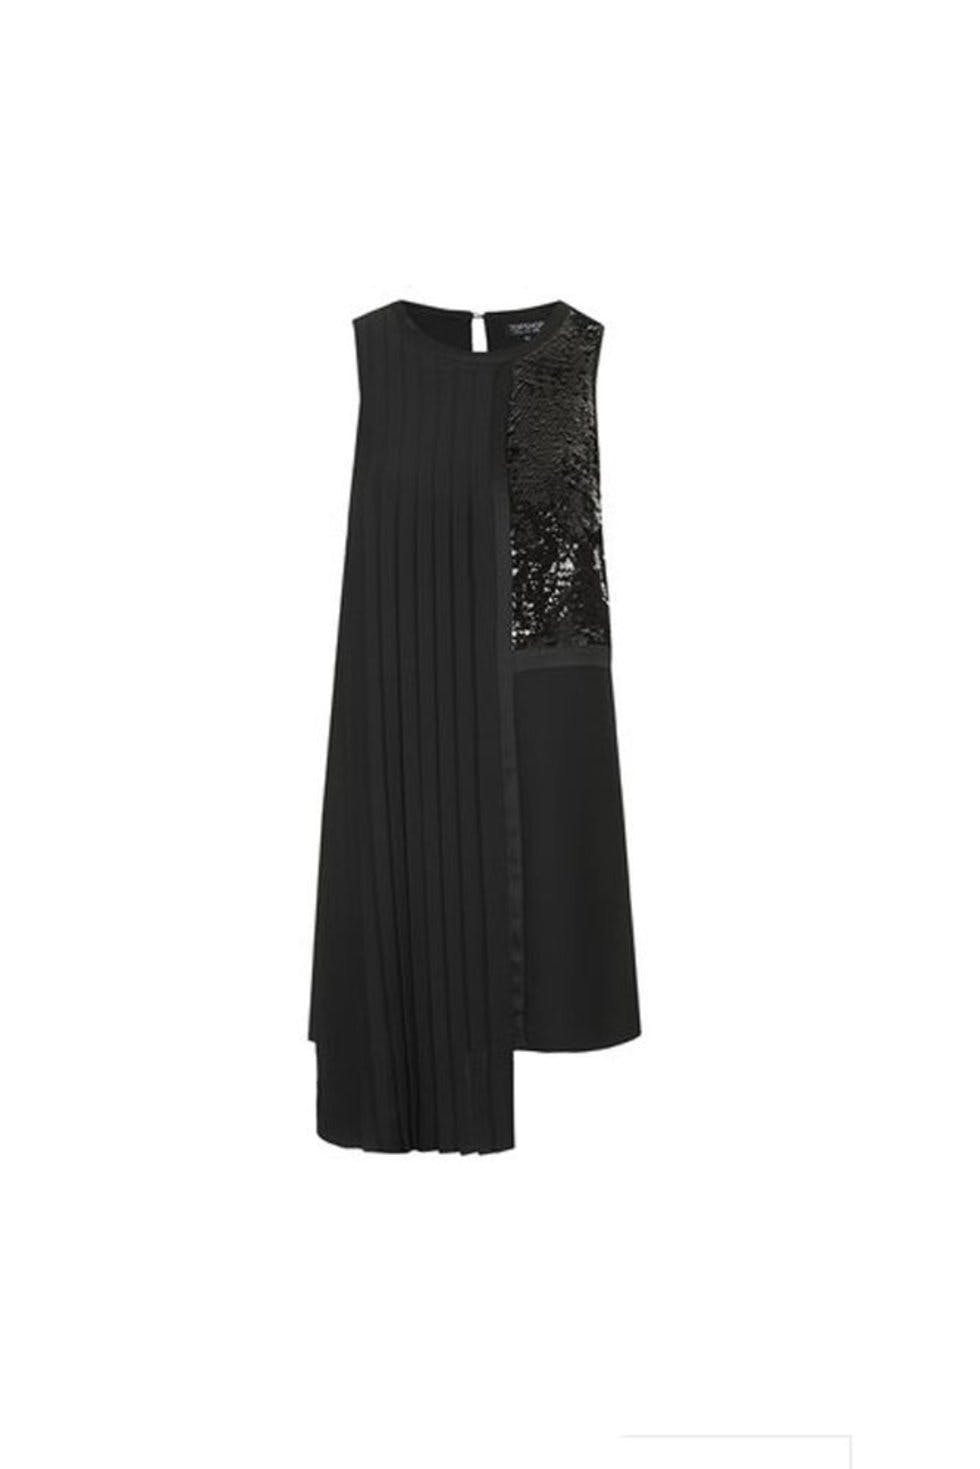 50 black dress all under £100 | Stylist